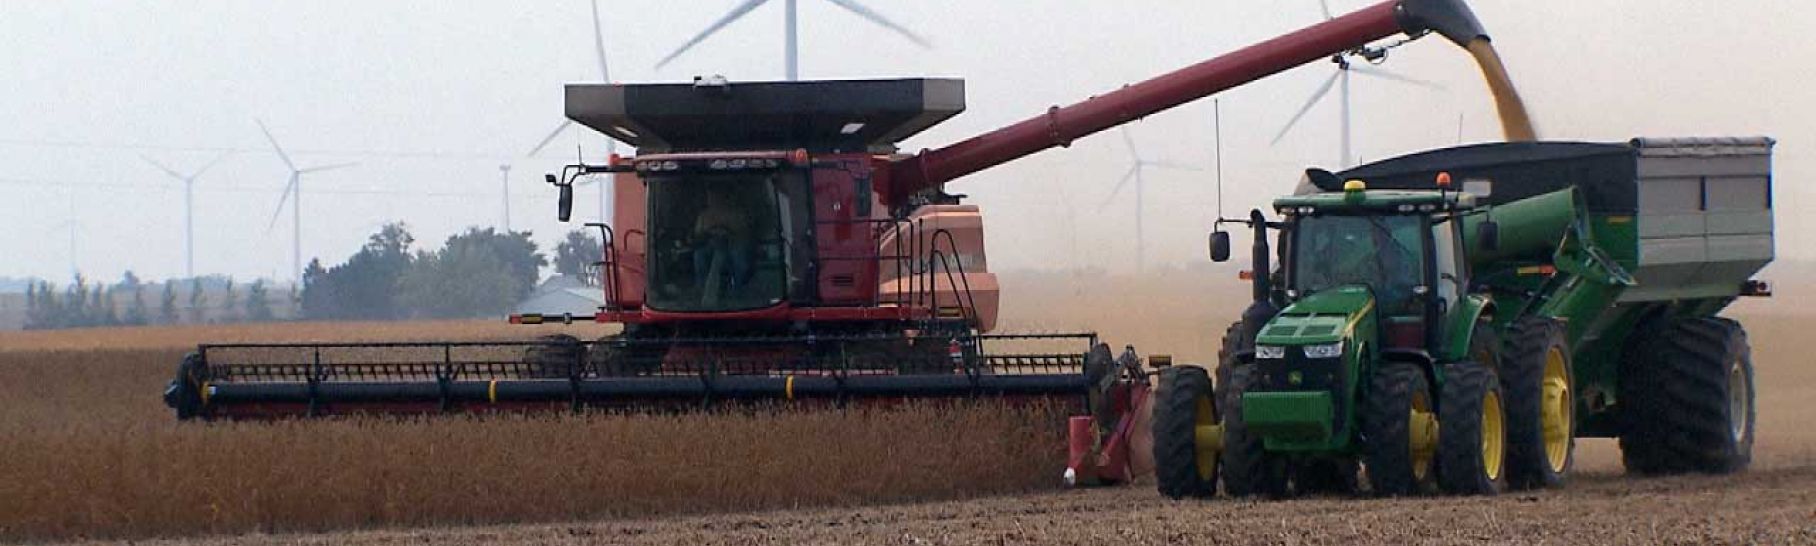 Combine harvesting an Iowa farm field